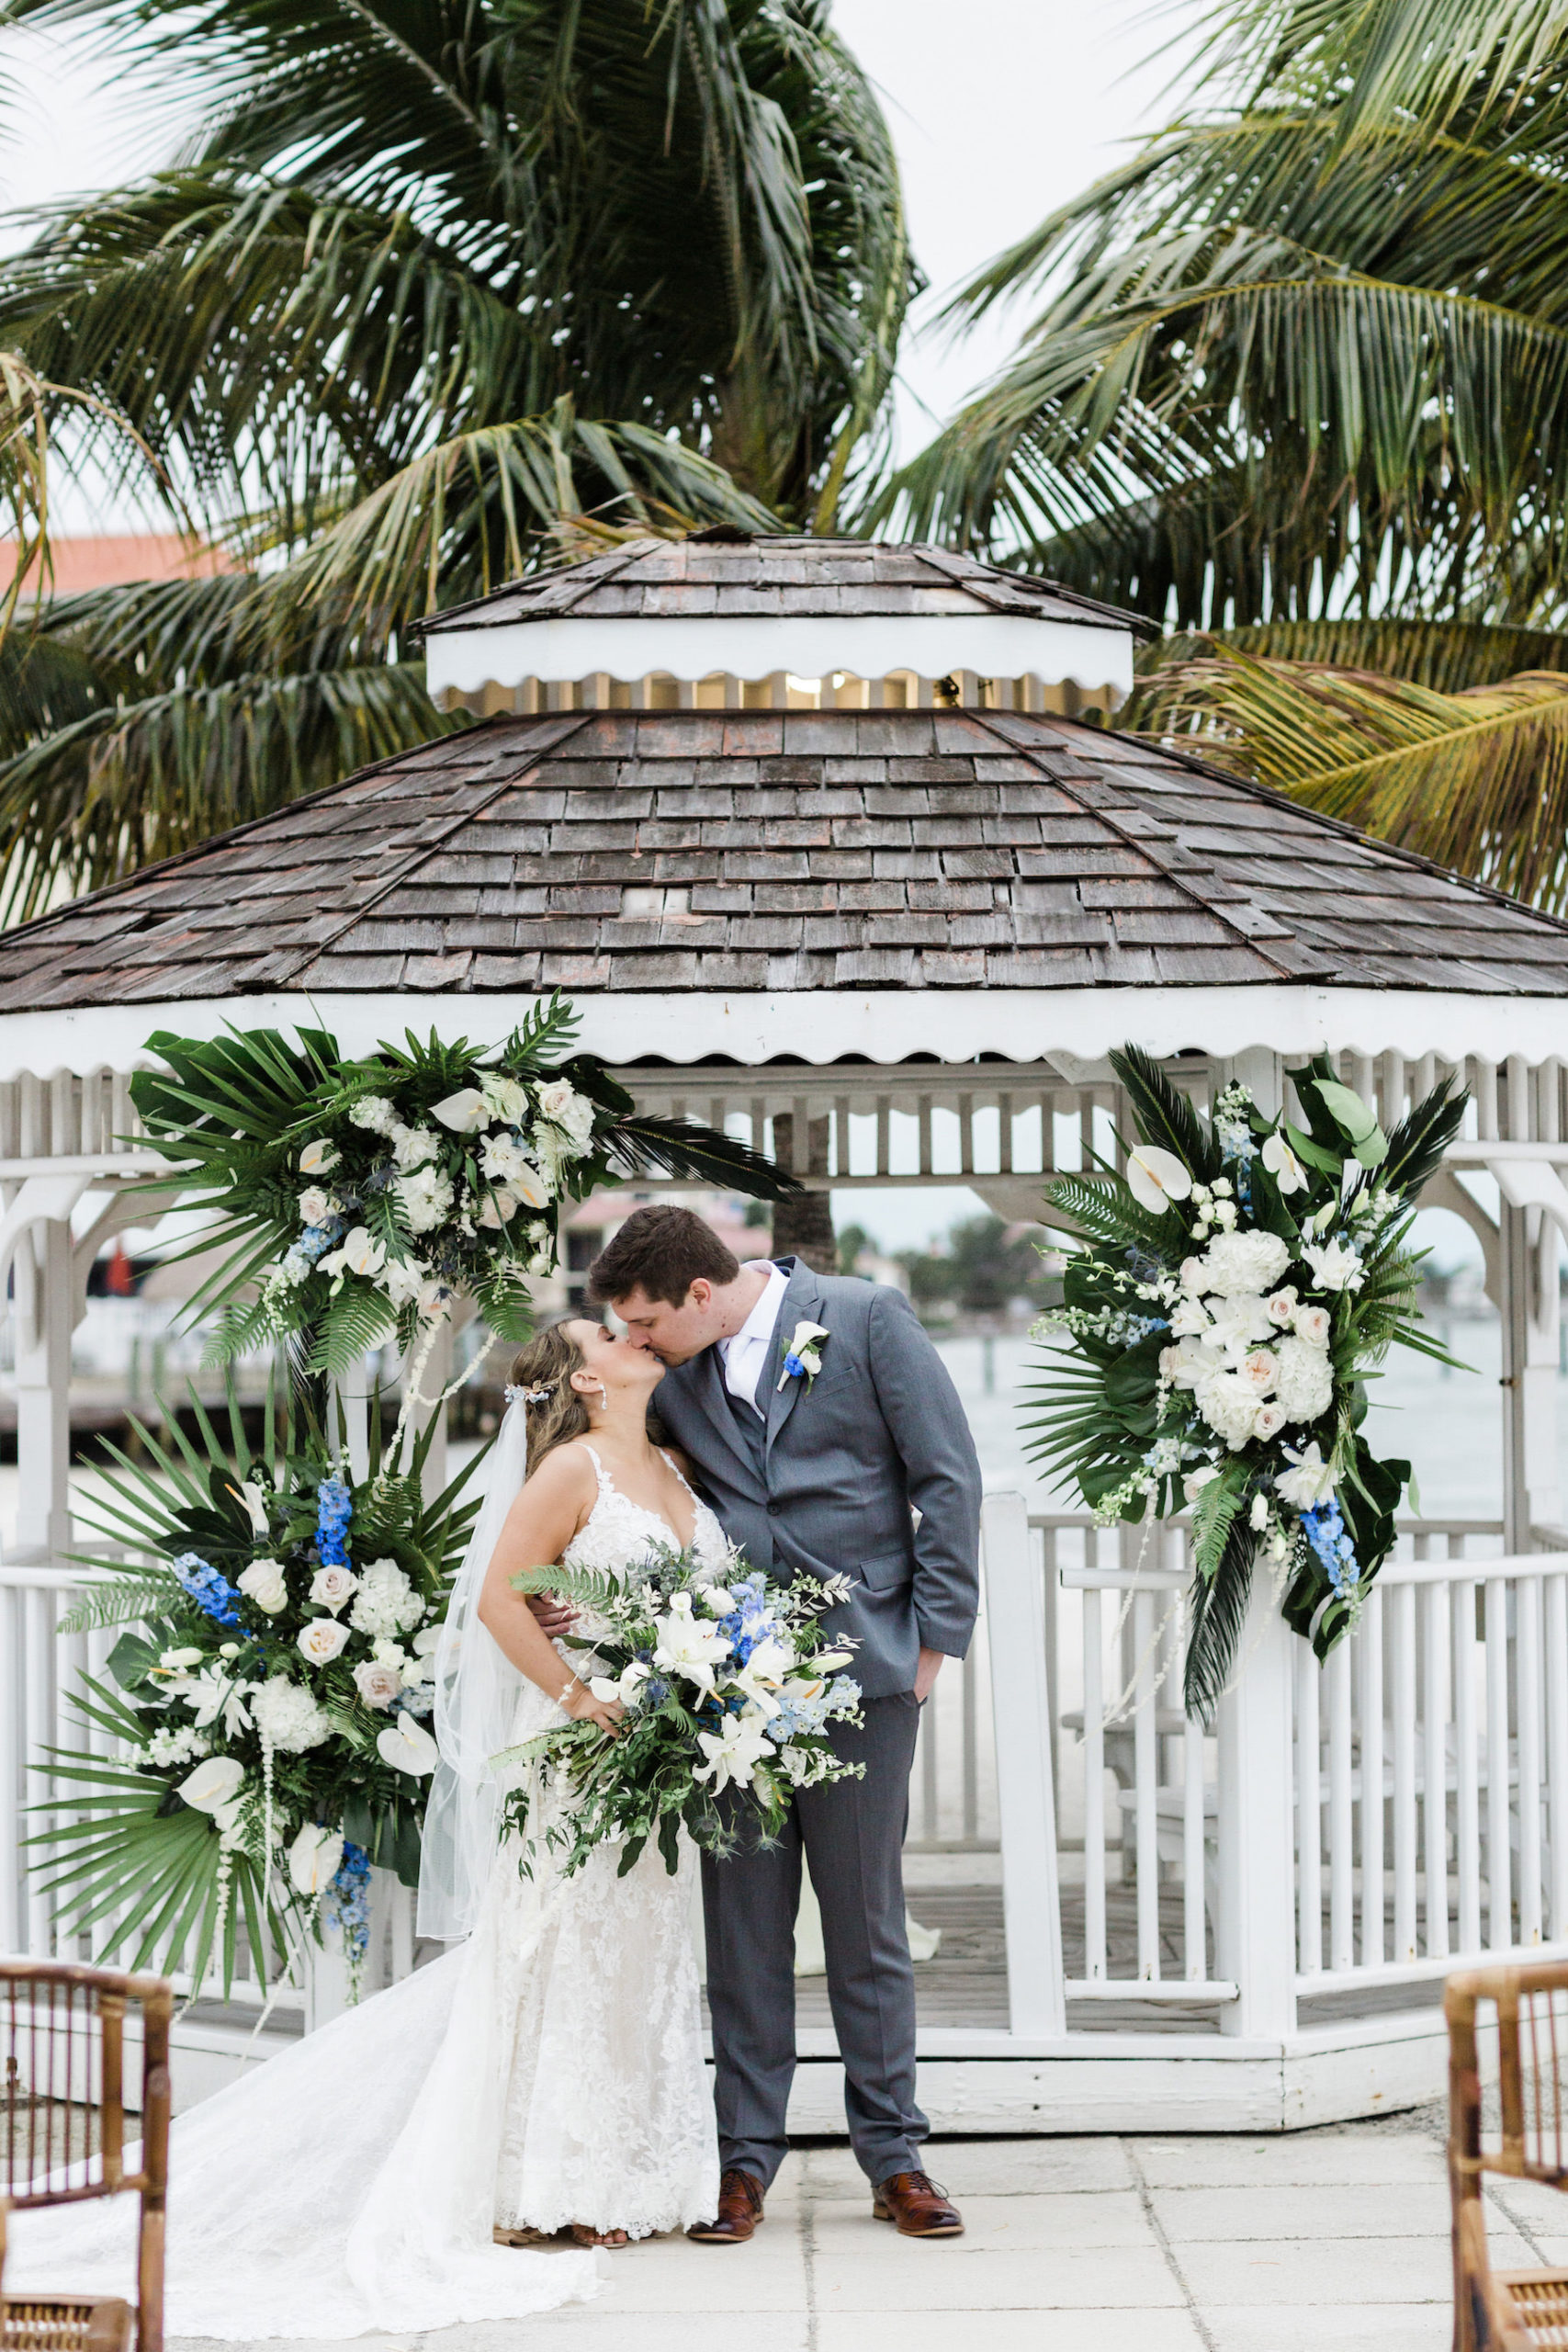 Bride and Groom Portraits at Beach Wedding Gazebo with Tropical Floral Arrangements | St. Pete Wedding Venue Isla Del Sol